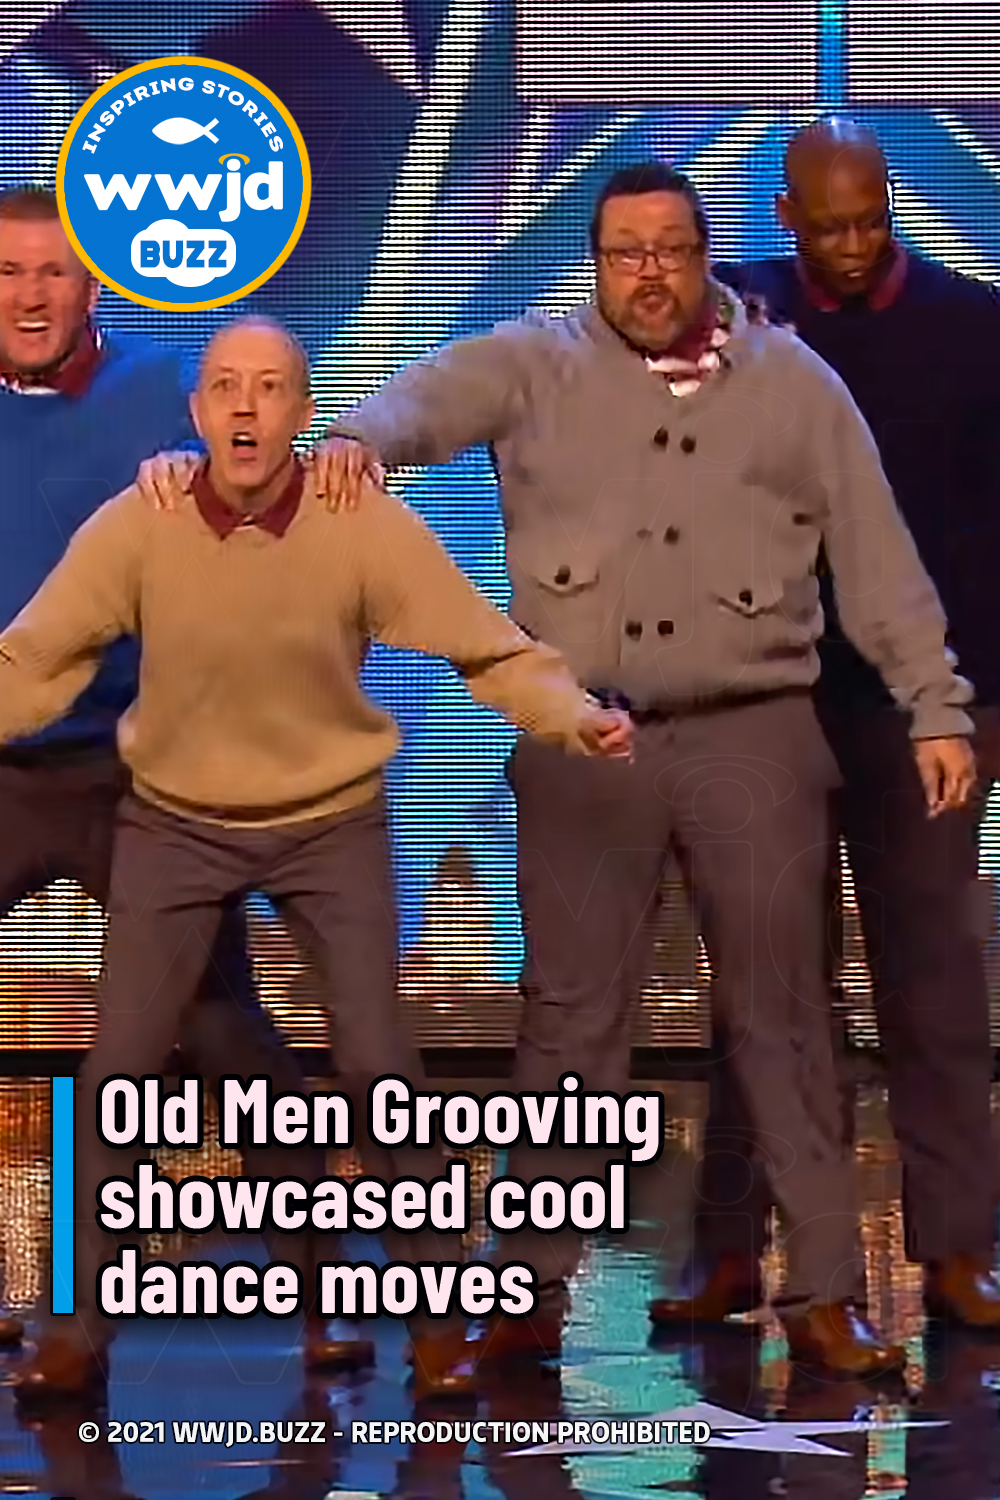 Old Men Grooving showcased cool dance moves